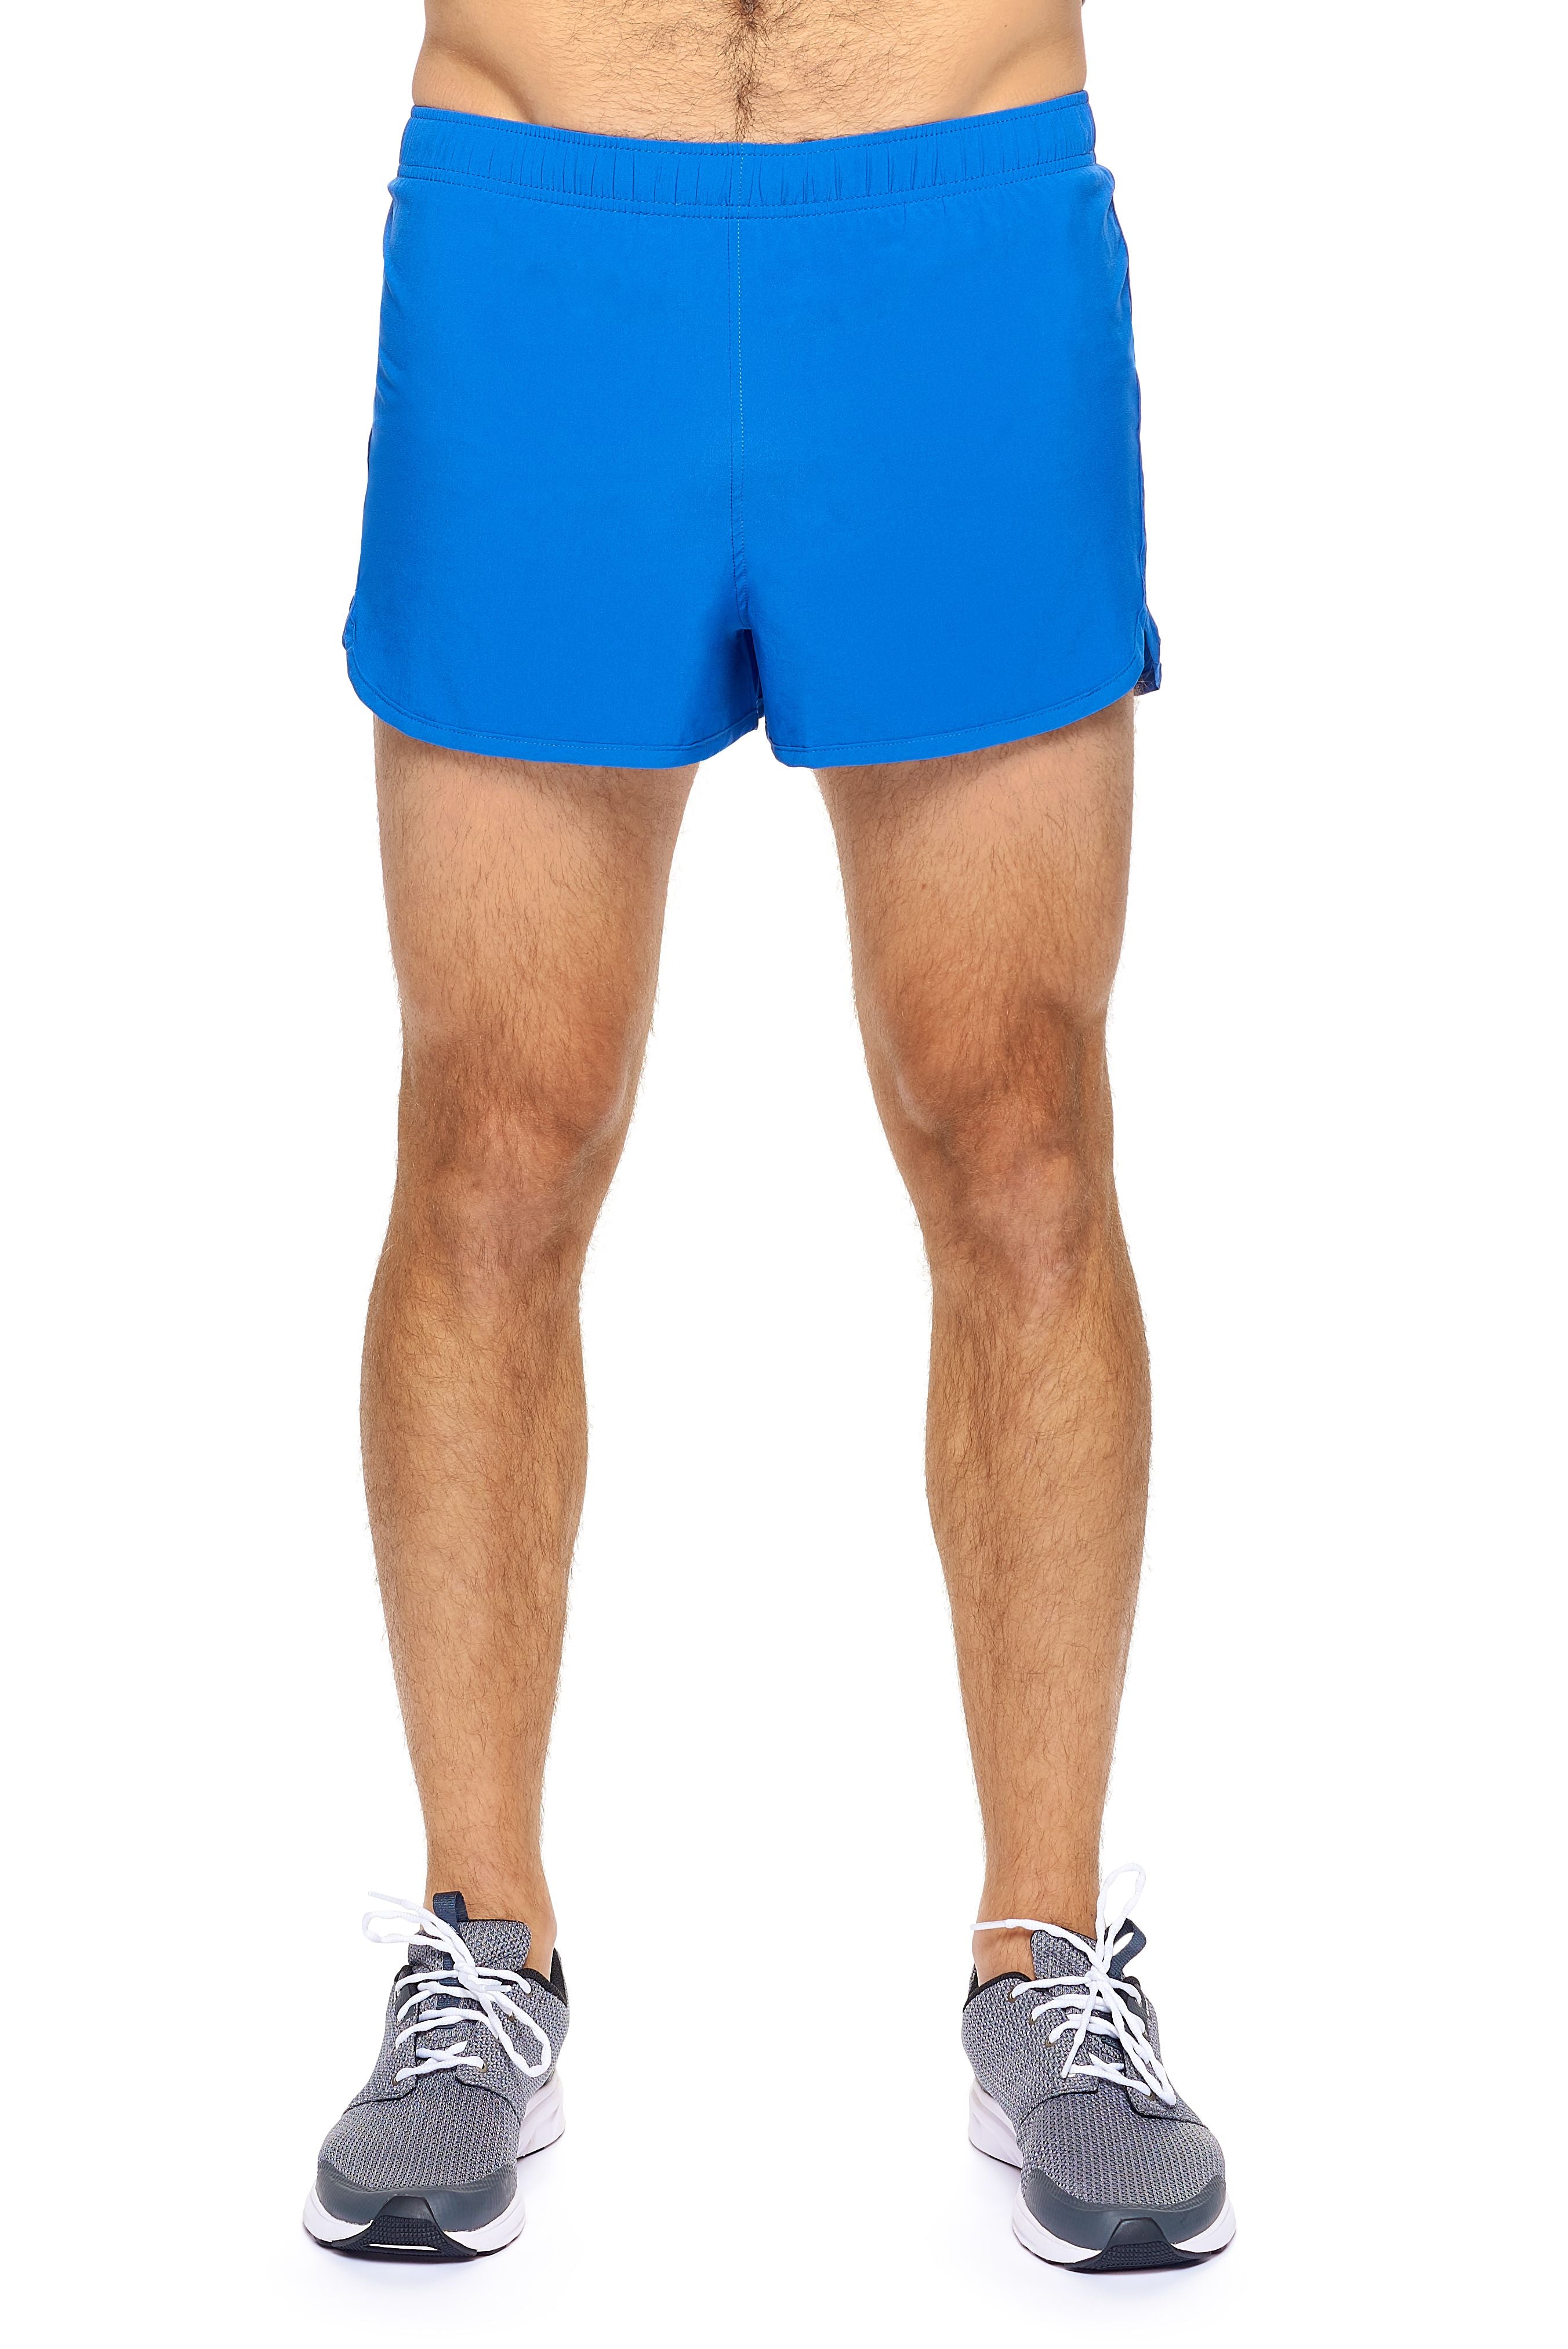 WL1081 Men's Sundance Running Shorts - Expert Brand#royal-blue